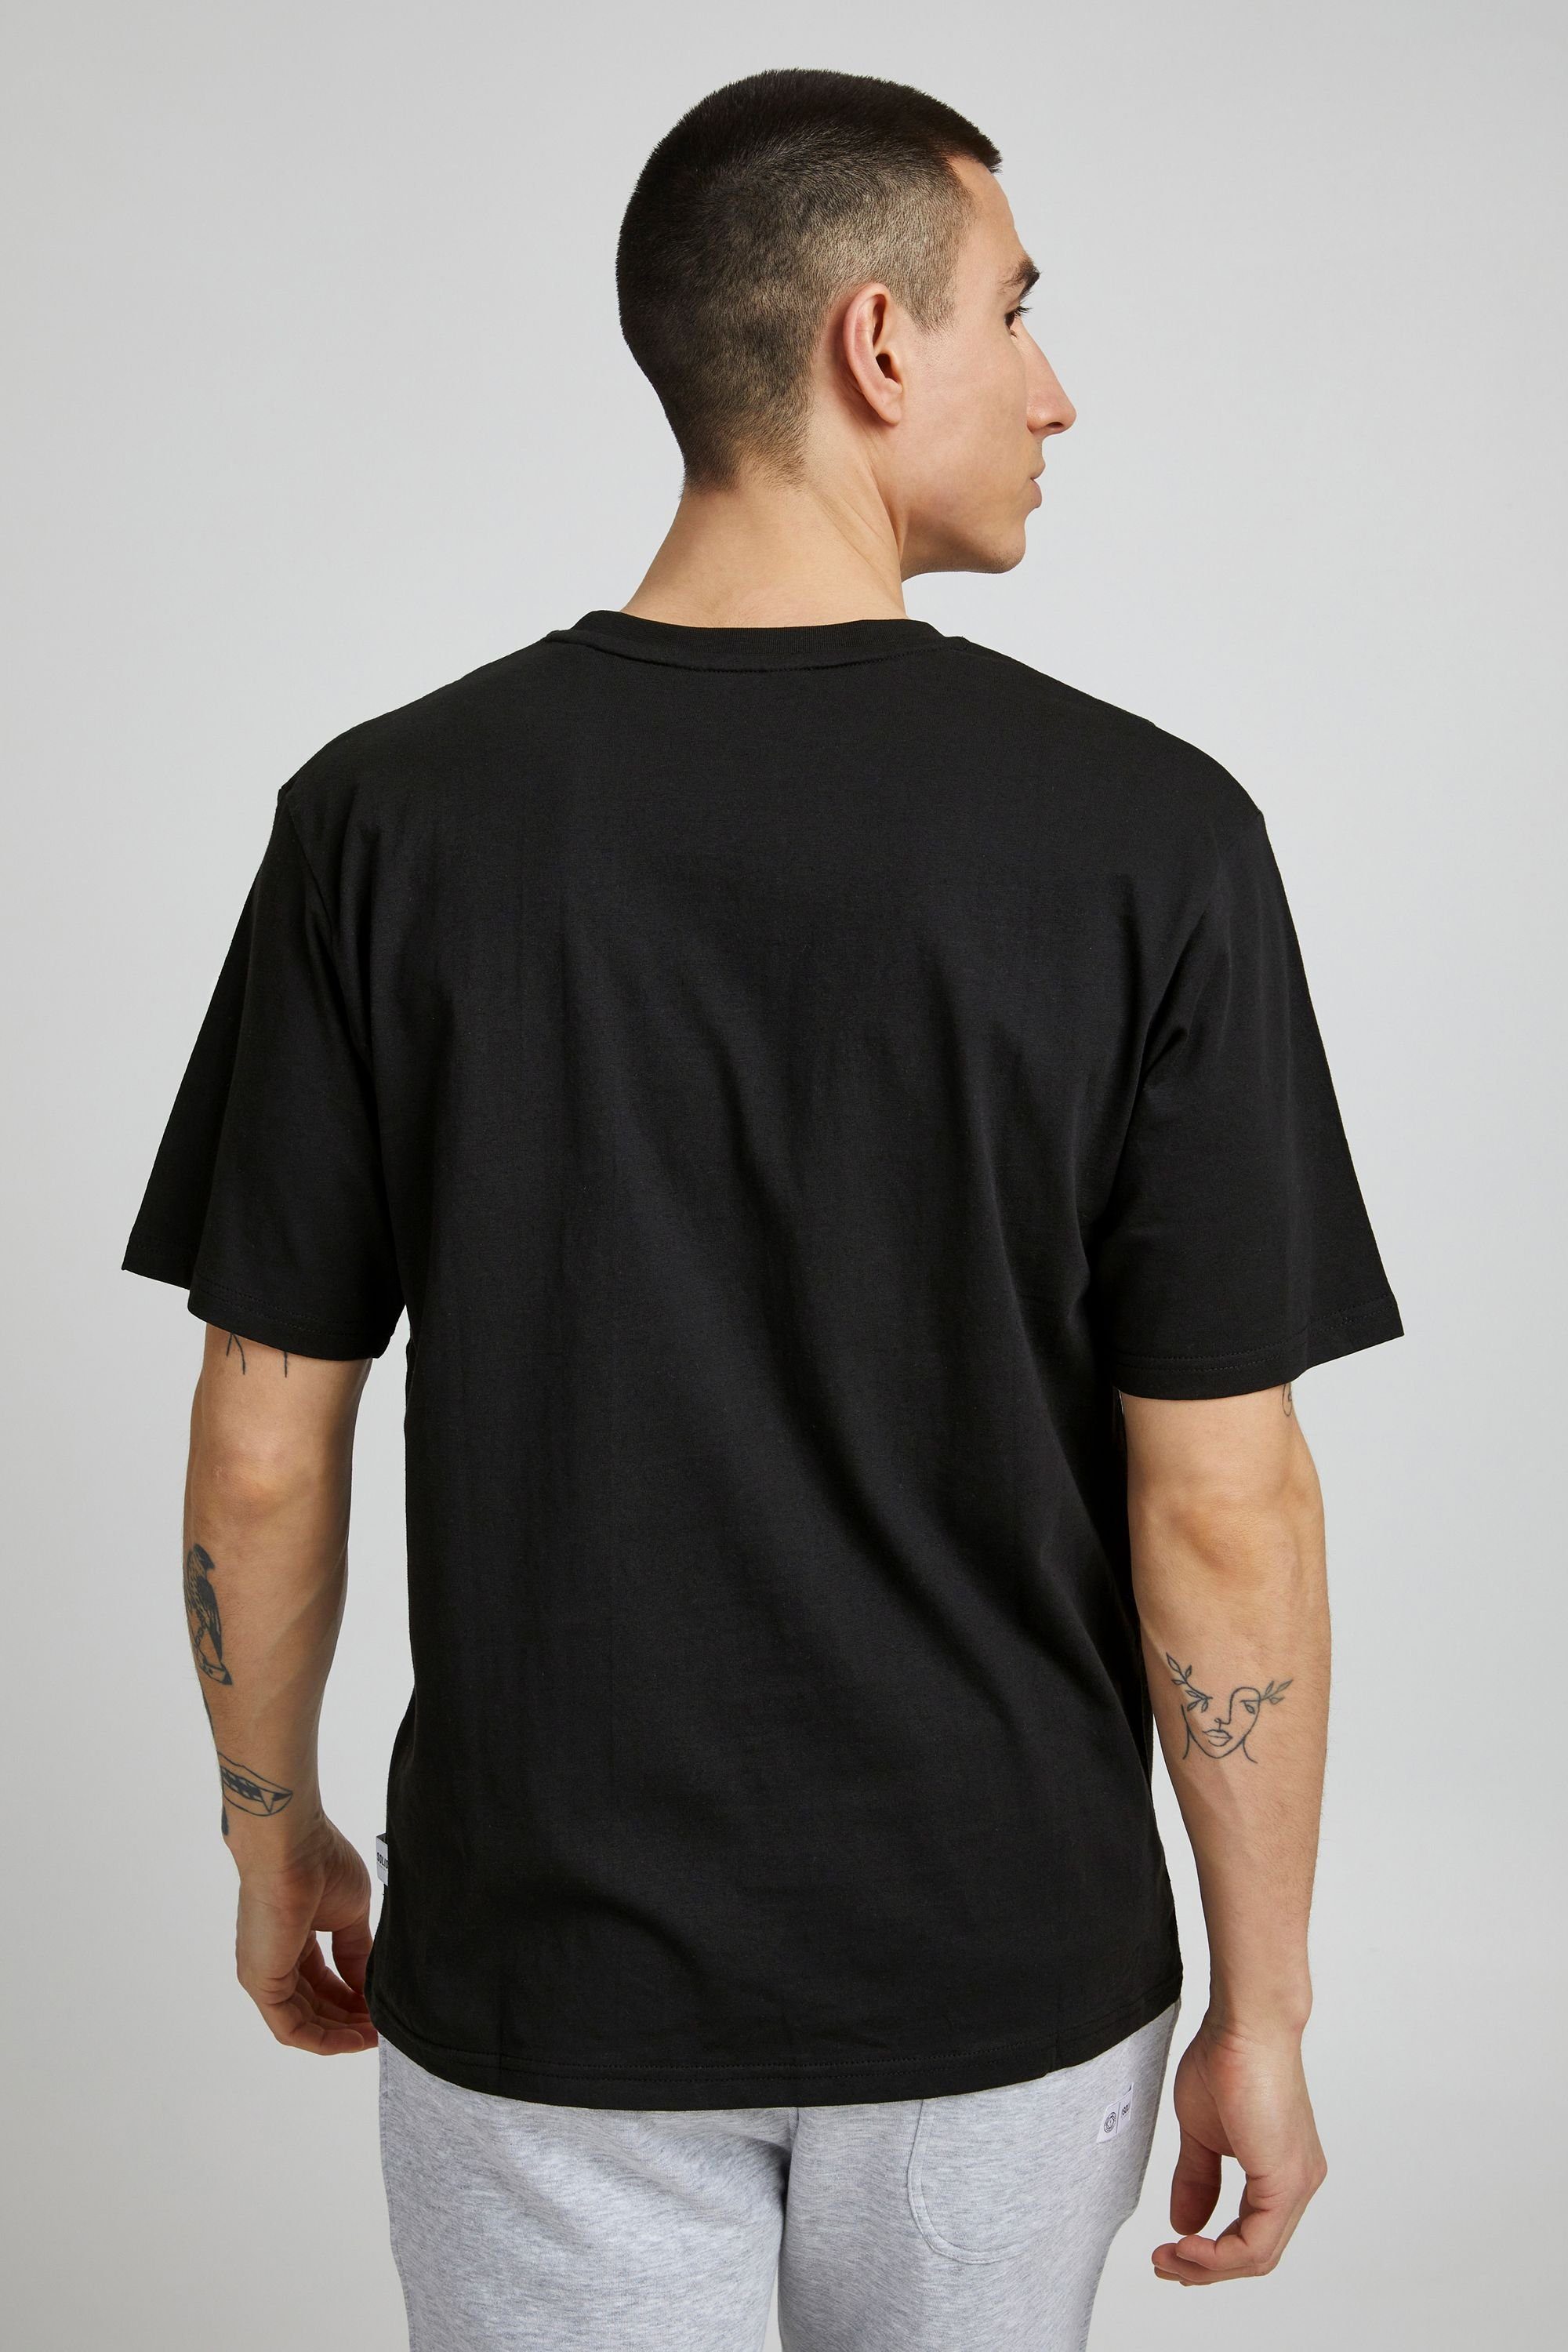 Solid T-Shirt SDRui Black True (194008)